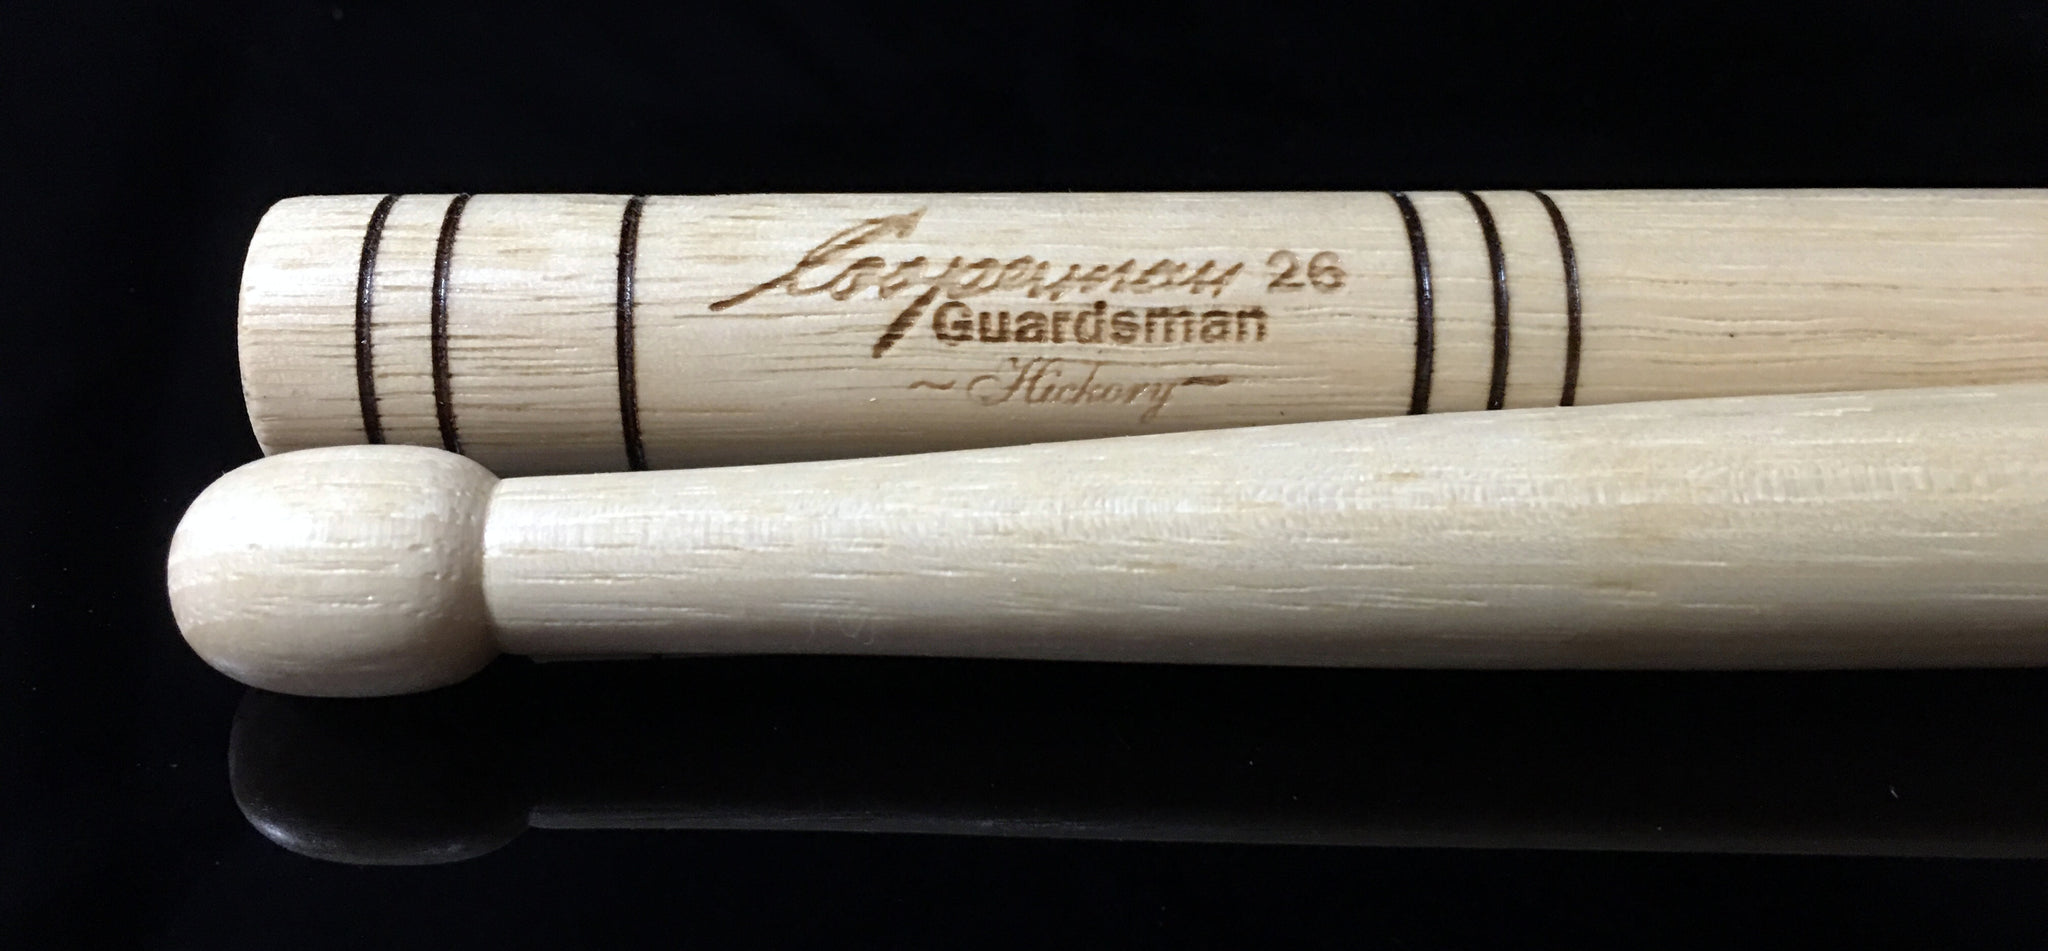 Cooperman model #26 Guardsman marching drumsticks